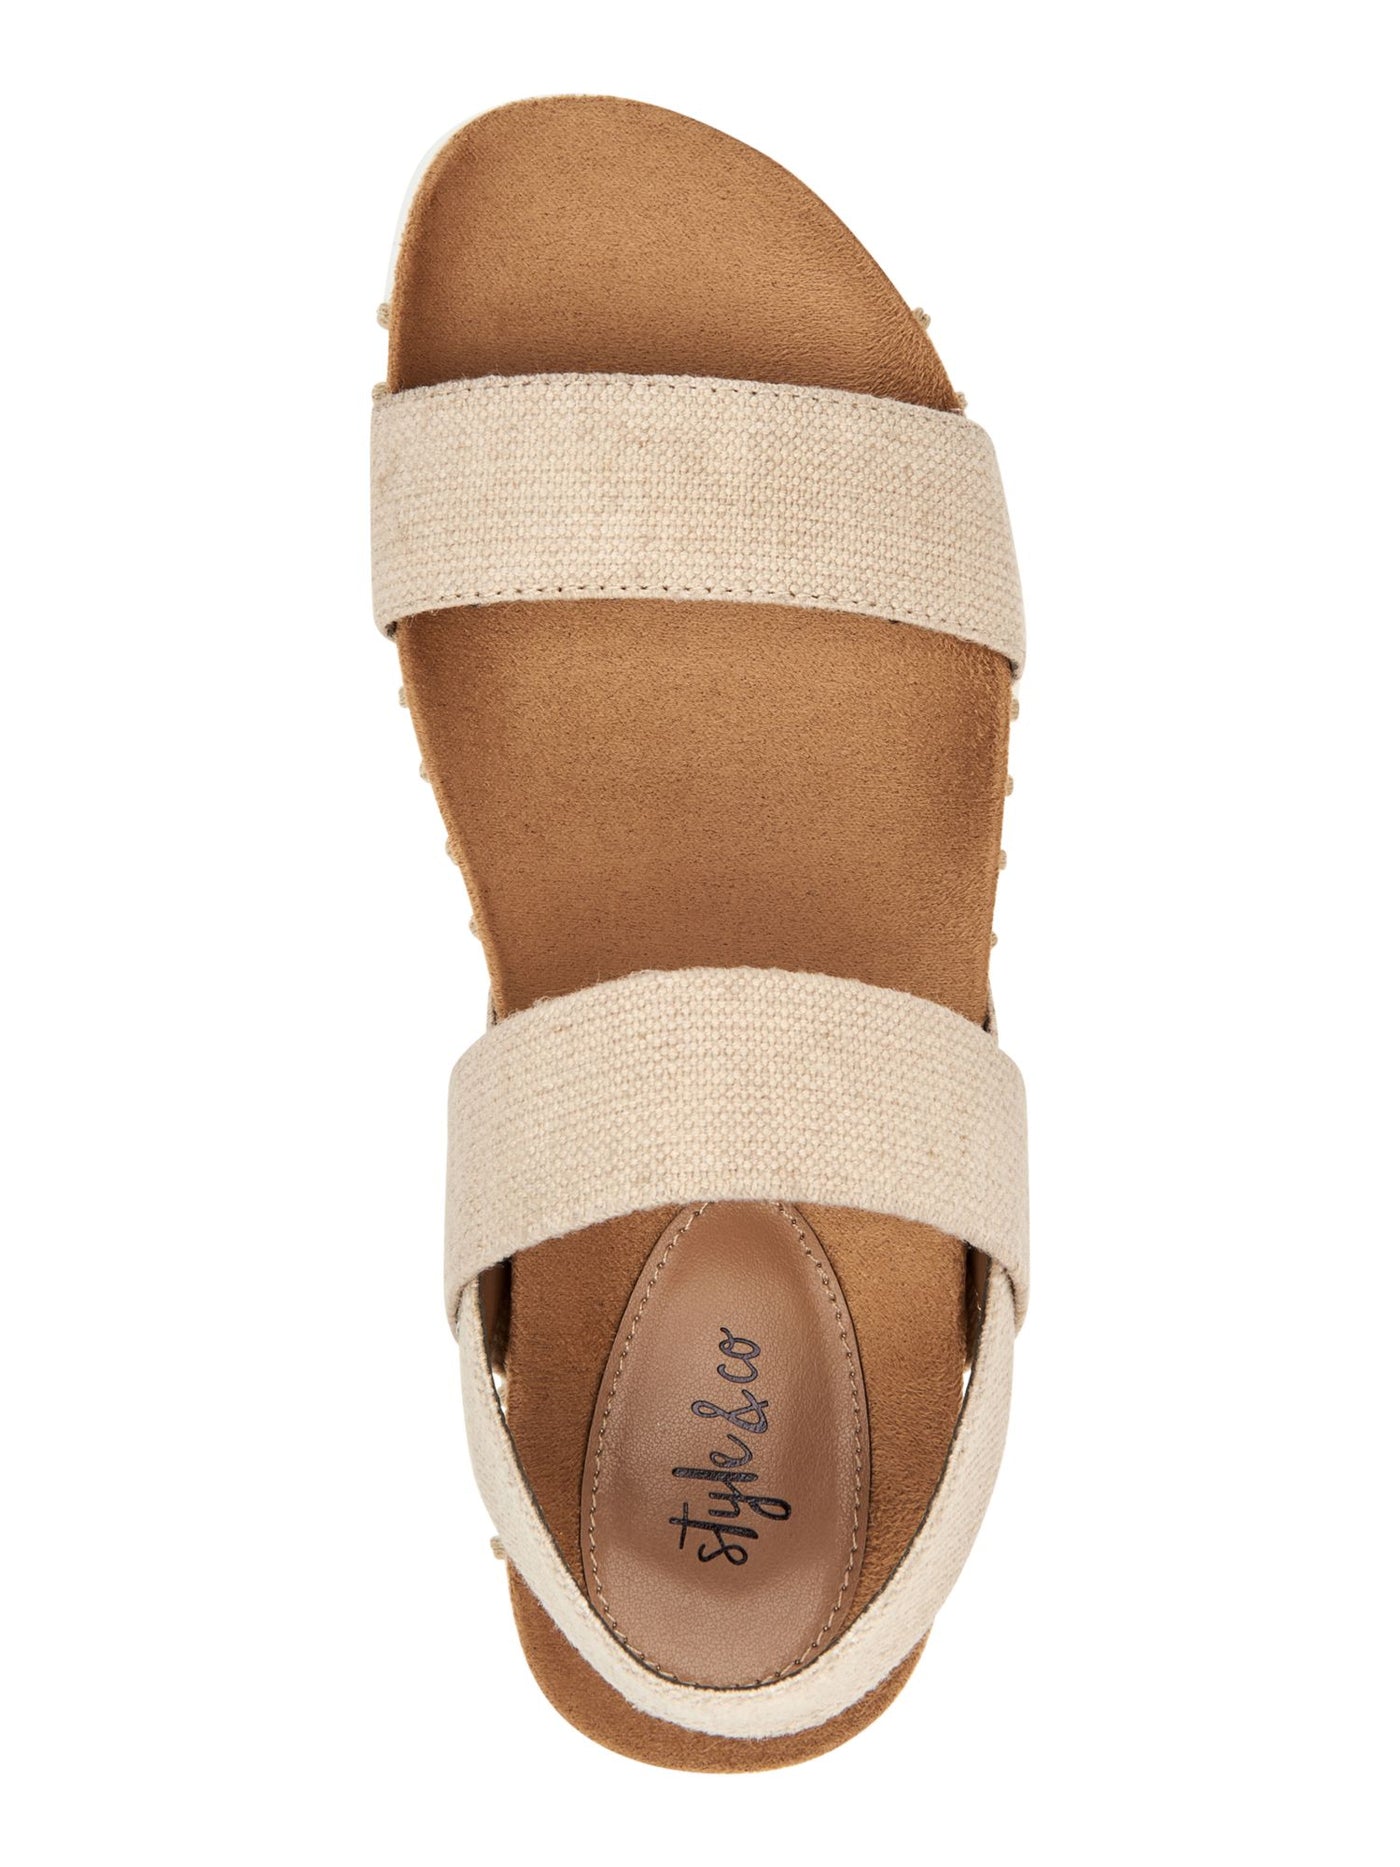 STYLE & COMPANY Womens Beige 1" Platform Stretch Comfort Milaa Round Toe Wedge Slip On Slingback Sandal 9.5 M